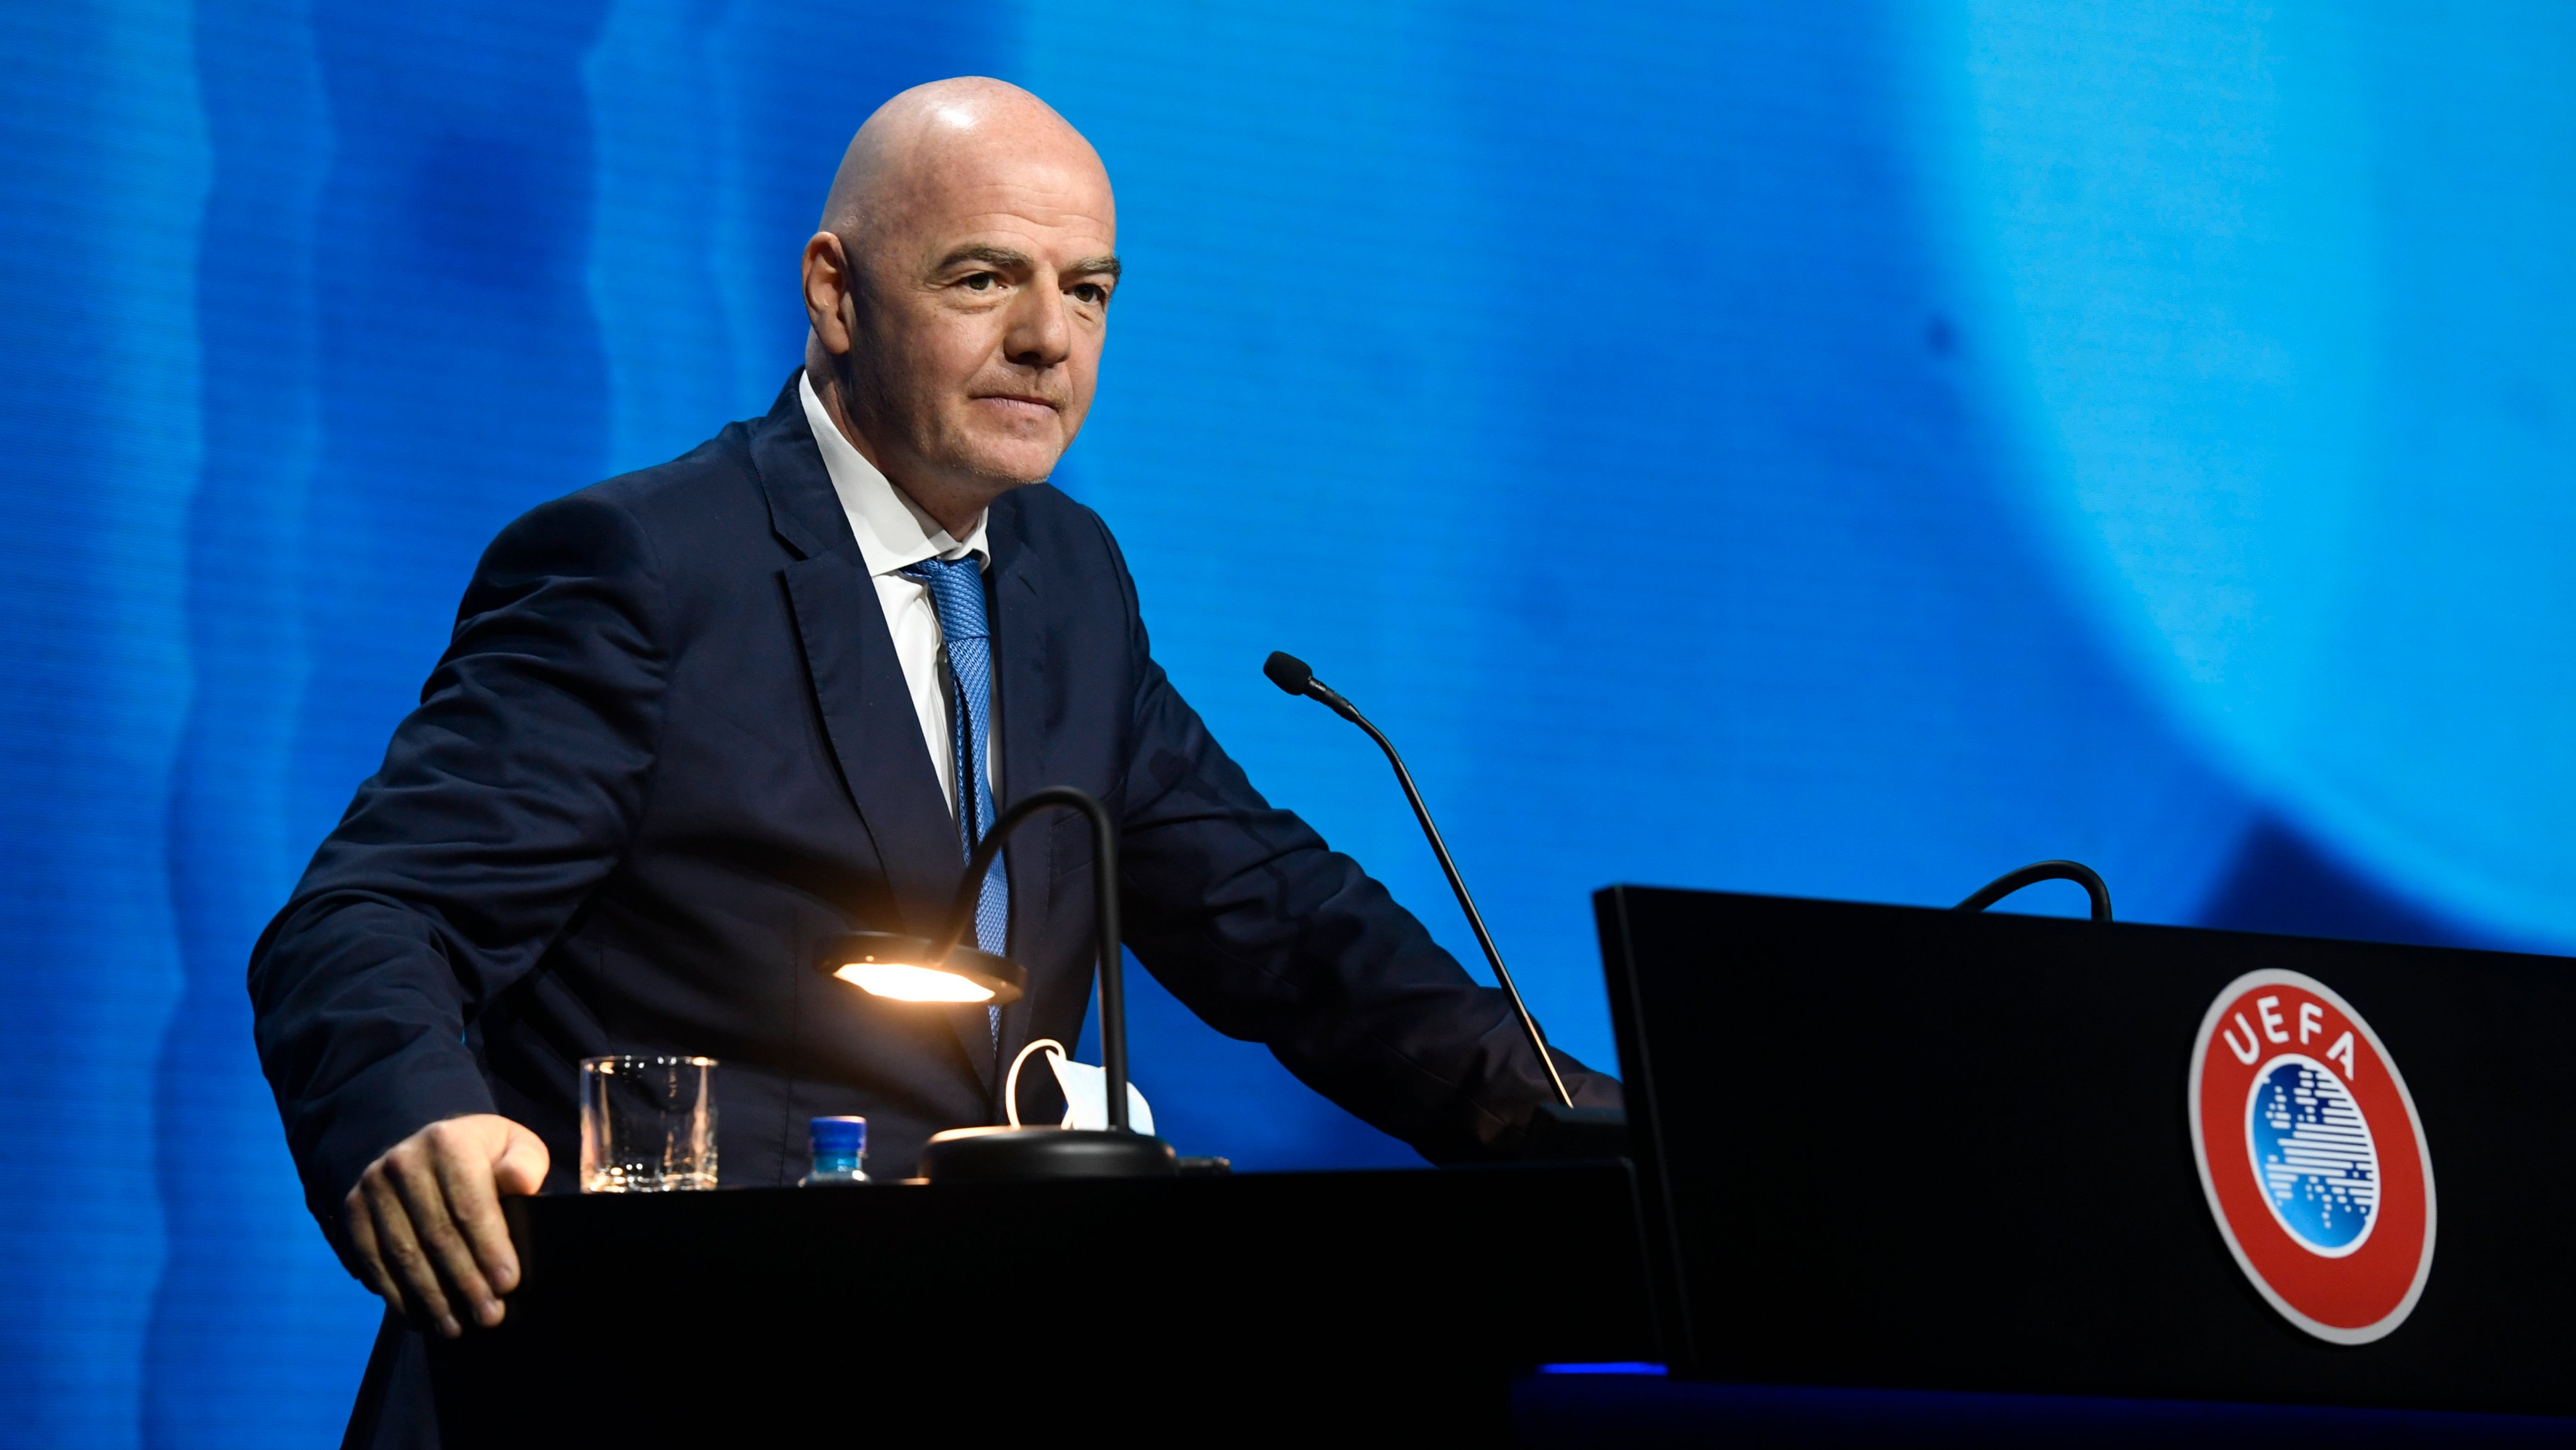 45th Ordinary UEFA Congress